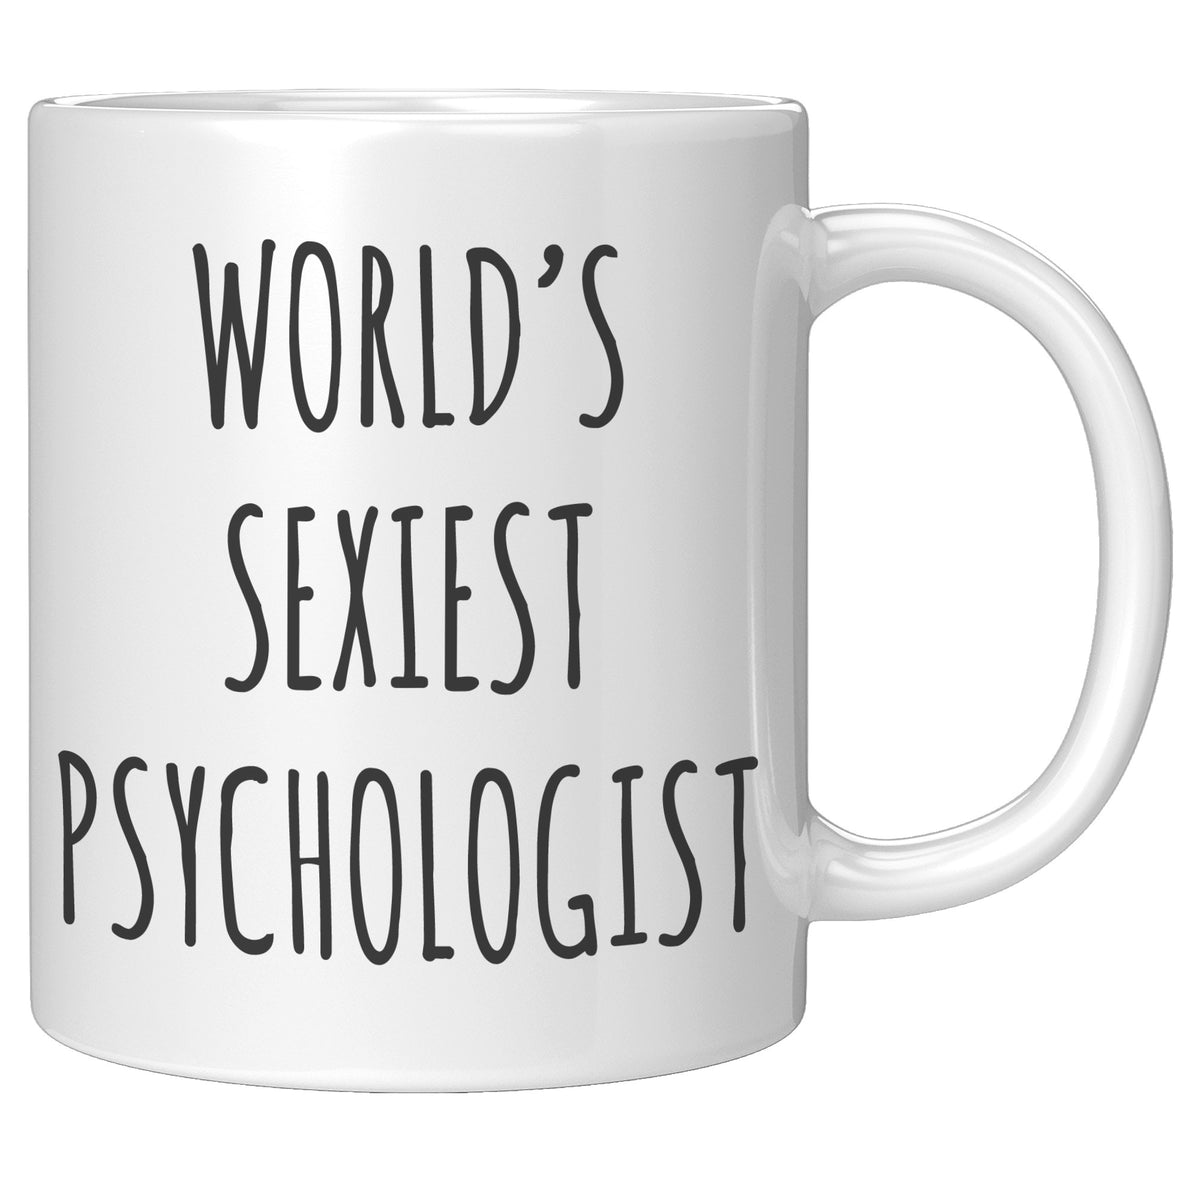 Psychologist Mug - World's Sexiest Psychologist